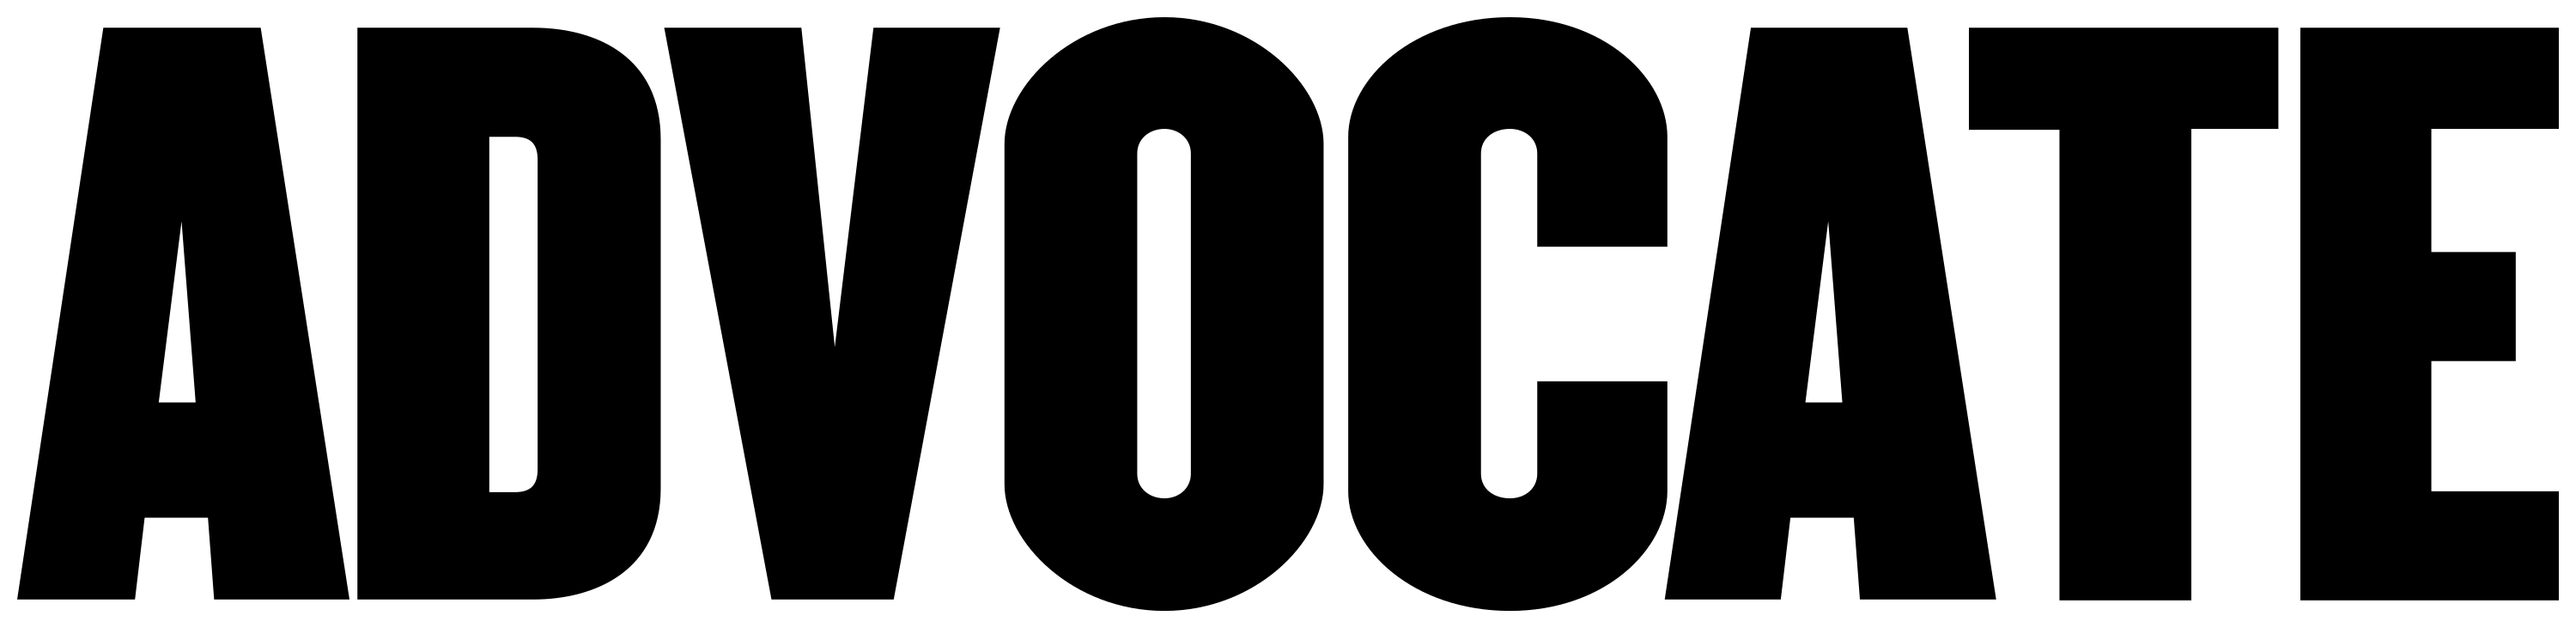 Advocate Logo Black Text